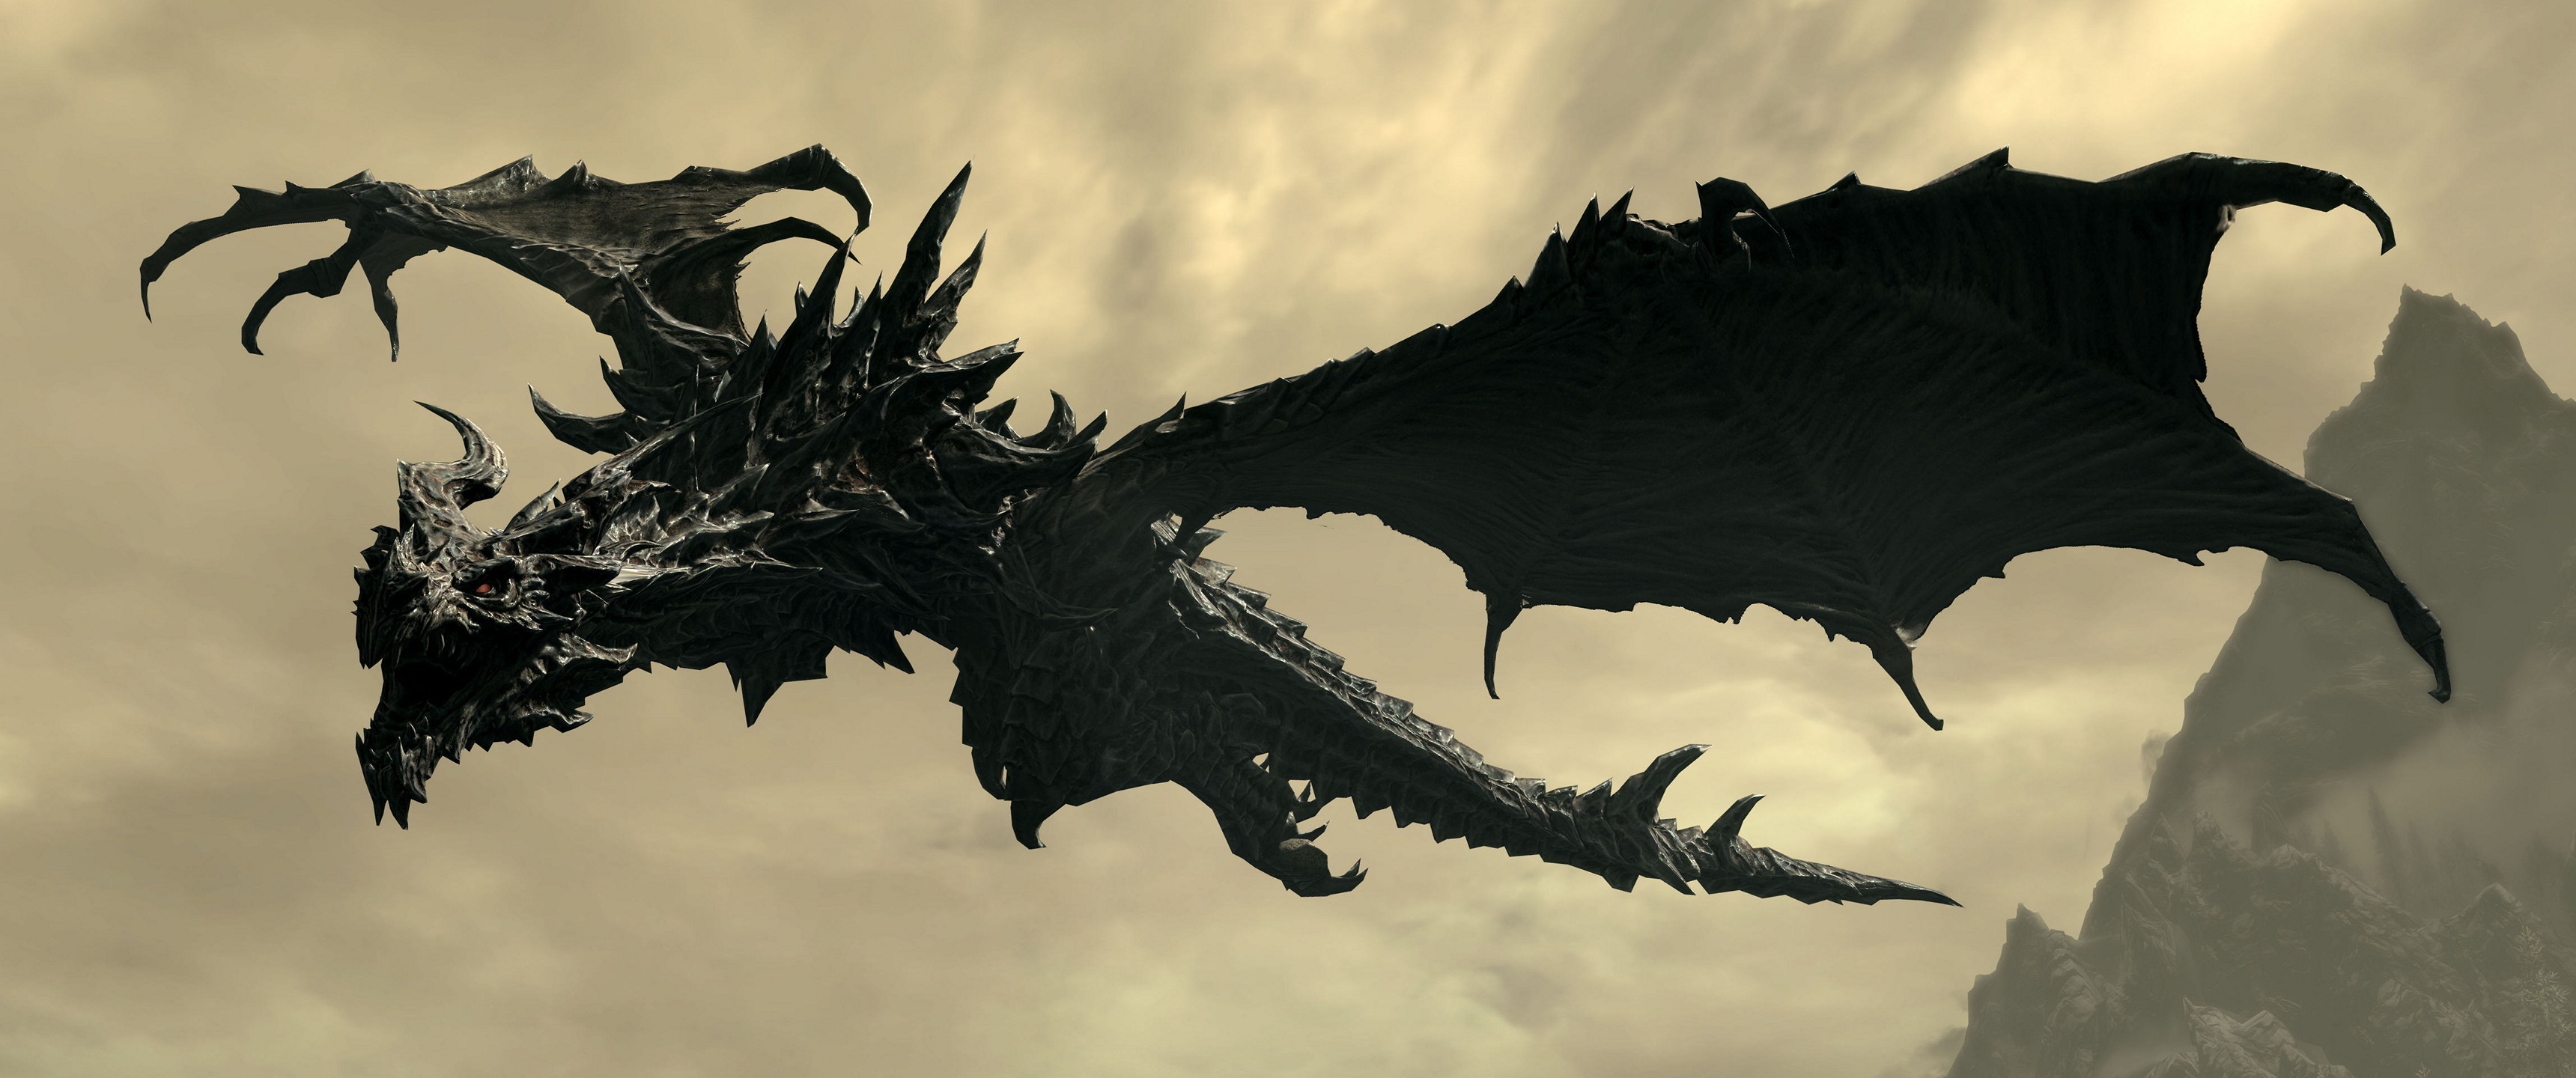 General 3440x1440 video games The Elder Scrolls V: Skyrim dragon Alduin RPG creature fantasy art